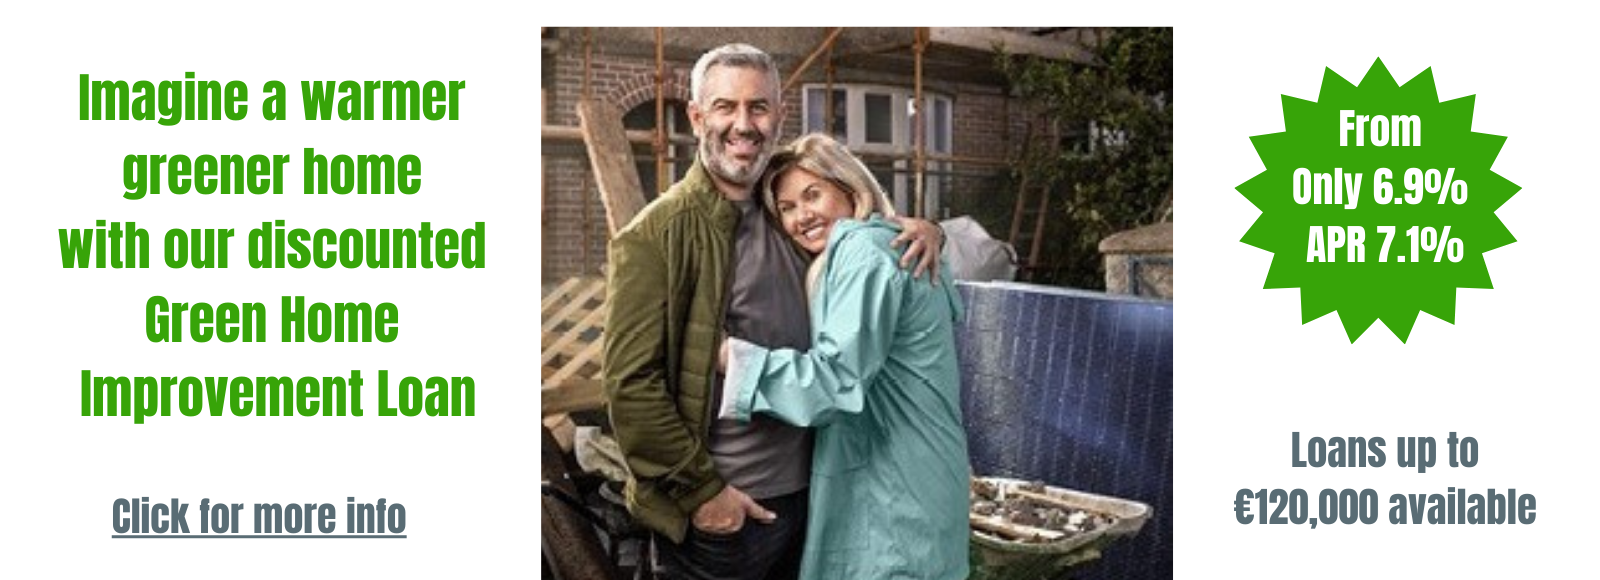 Blackrock Credit Union Home Improvement Loans image showing couple outside house getting home improvements